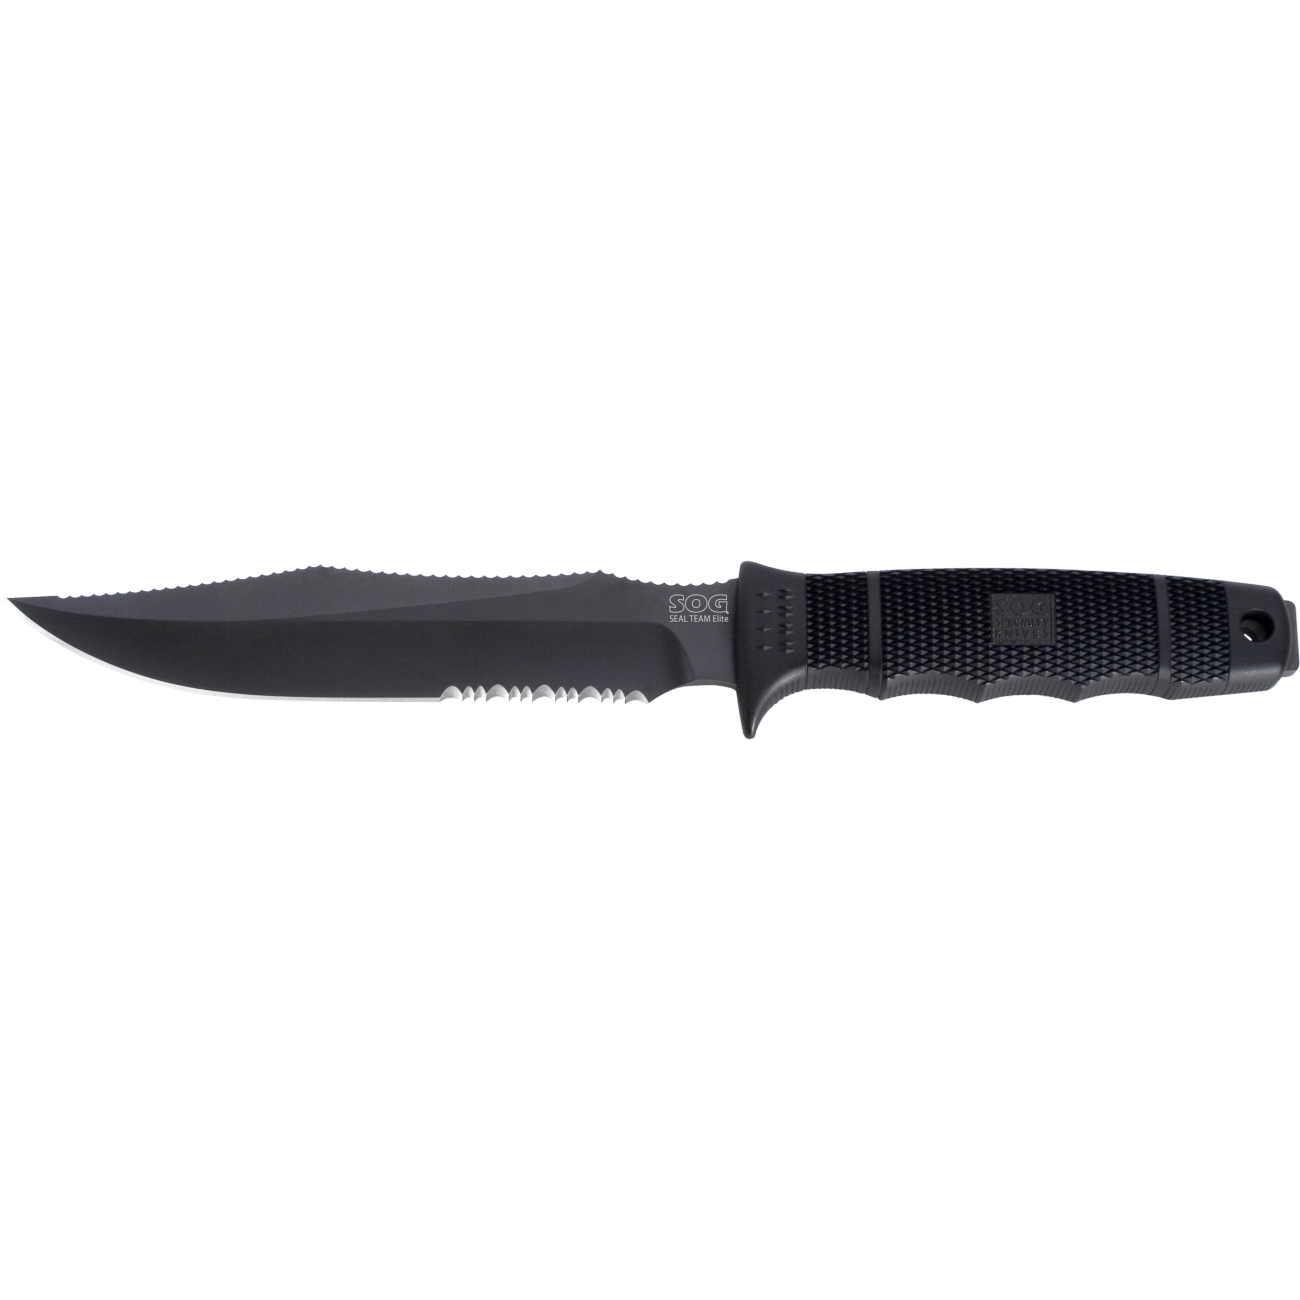 KNIFE, SEAL TEAM ELITE - 7 KNIFE